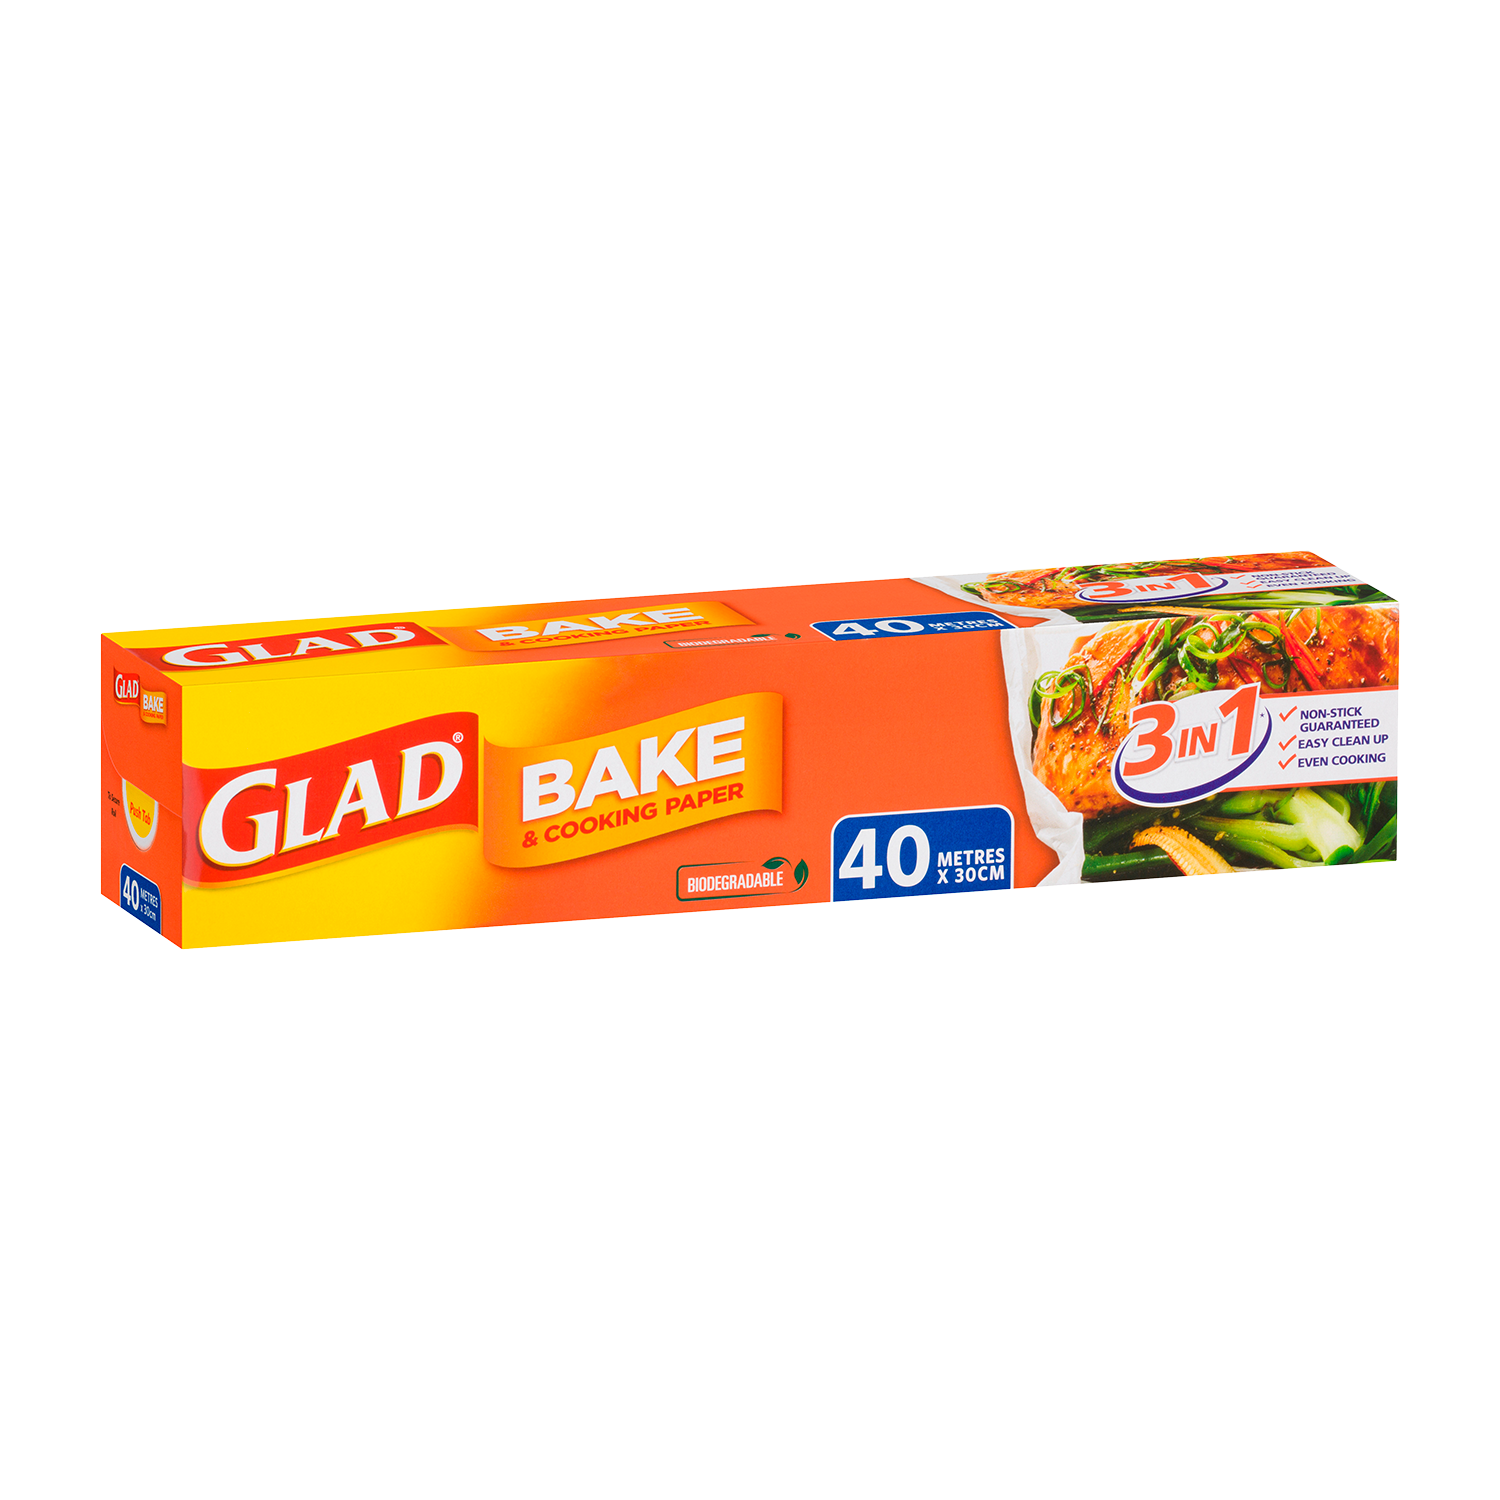 Glad Bake 30cm x 40m